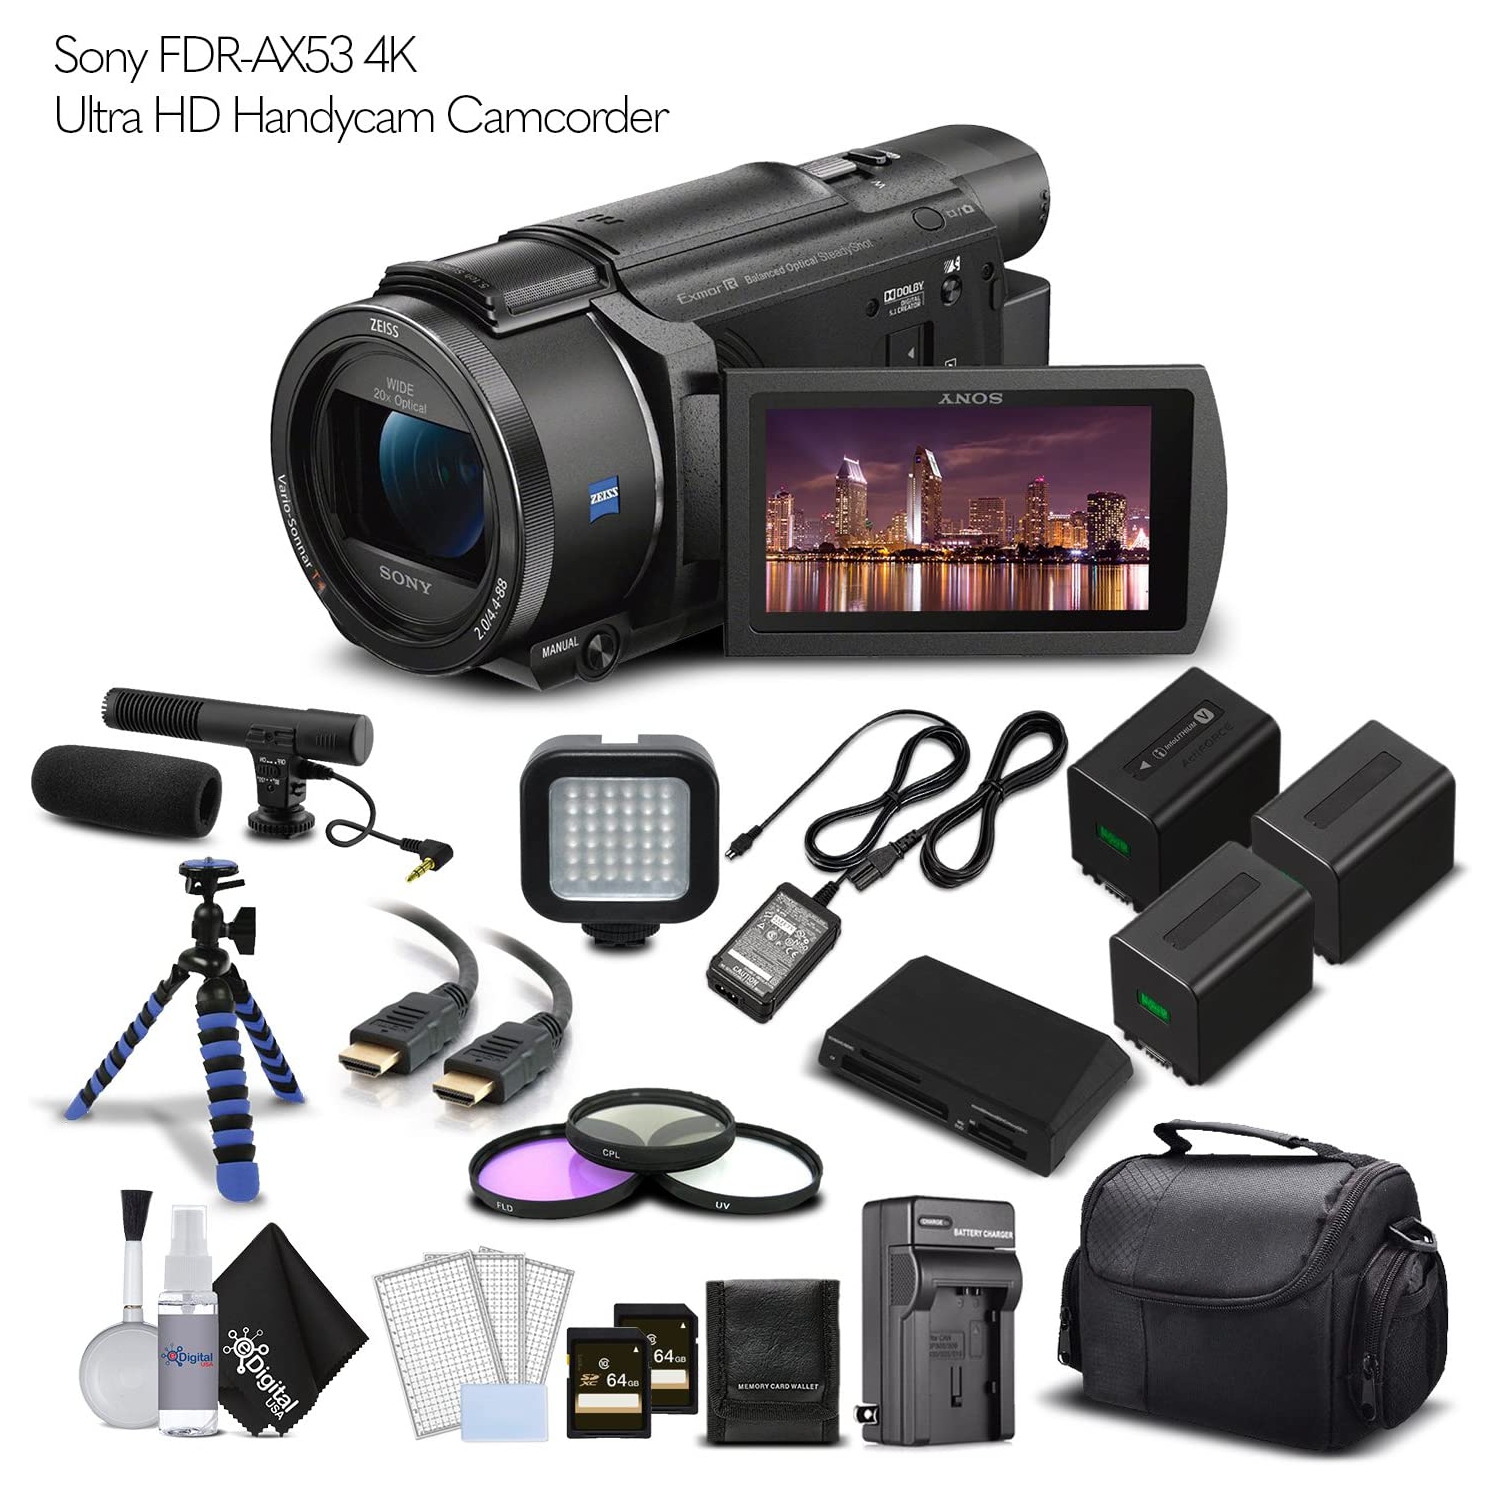 Refurbished (Good) - Sony FDR-AX53 4K Ultra HD Handycam Camcorder. - Professional Bundle